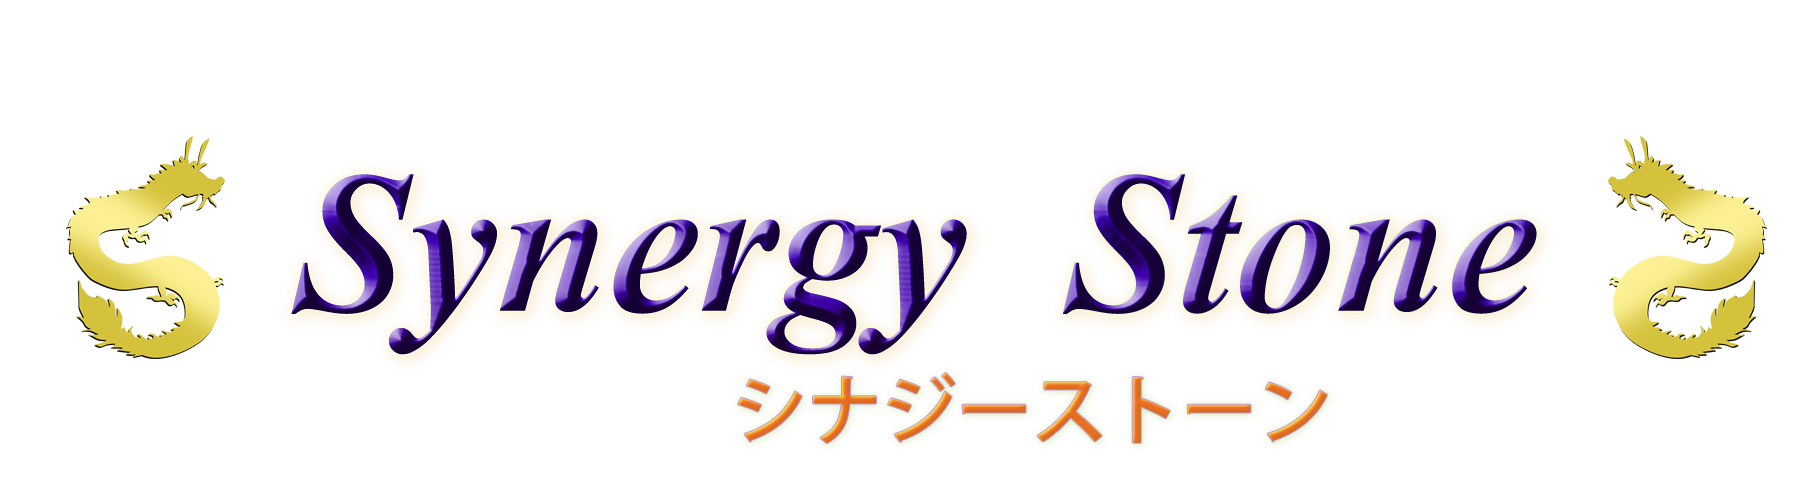 Synergy Stone(シナジーストーン)